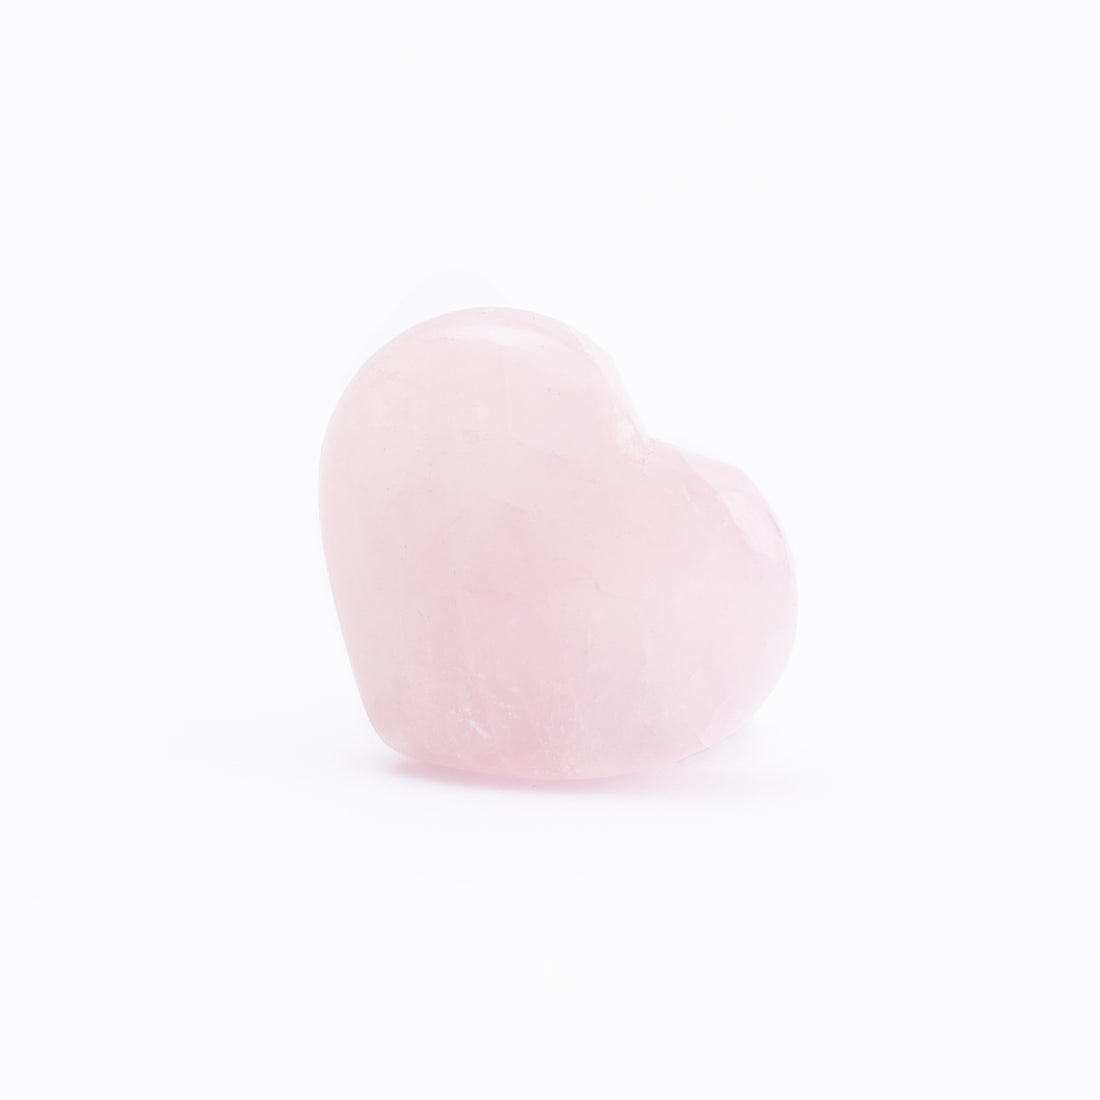 Rose Quartz Heart Shaped Crystal